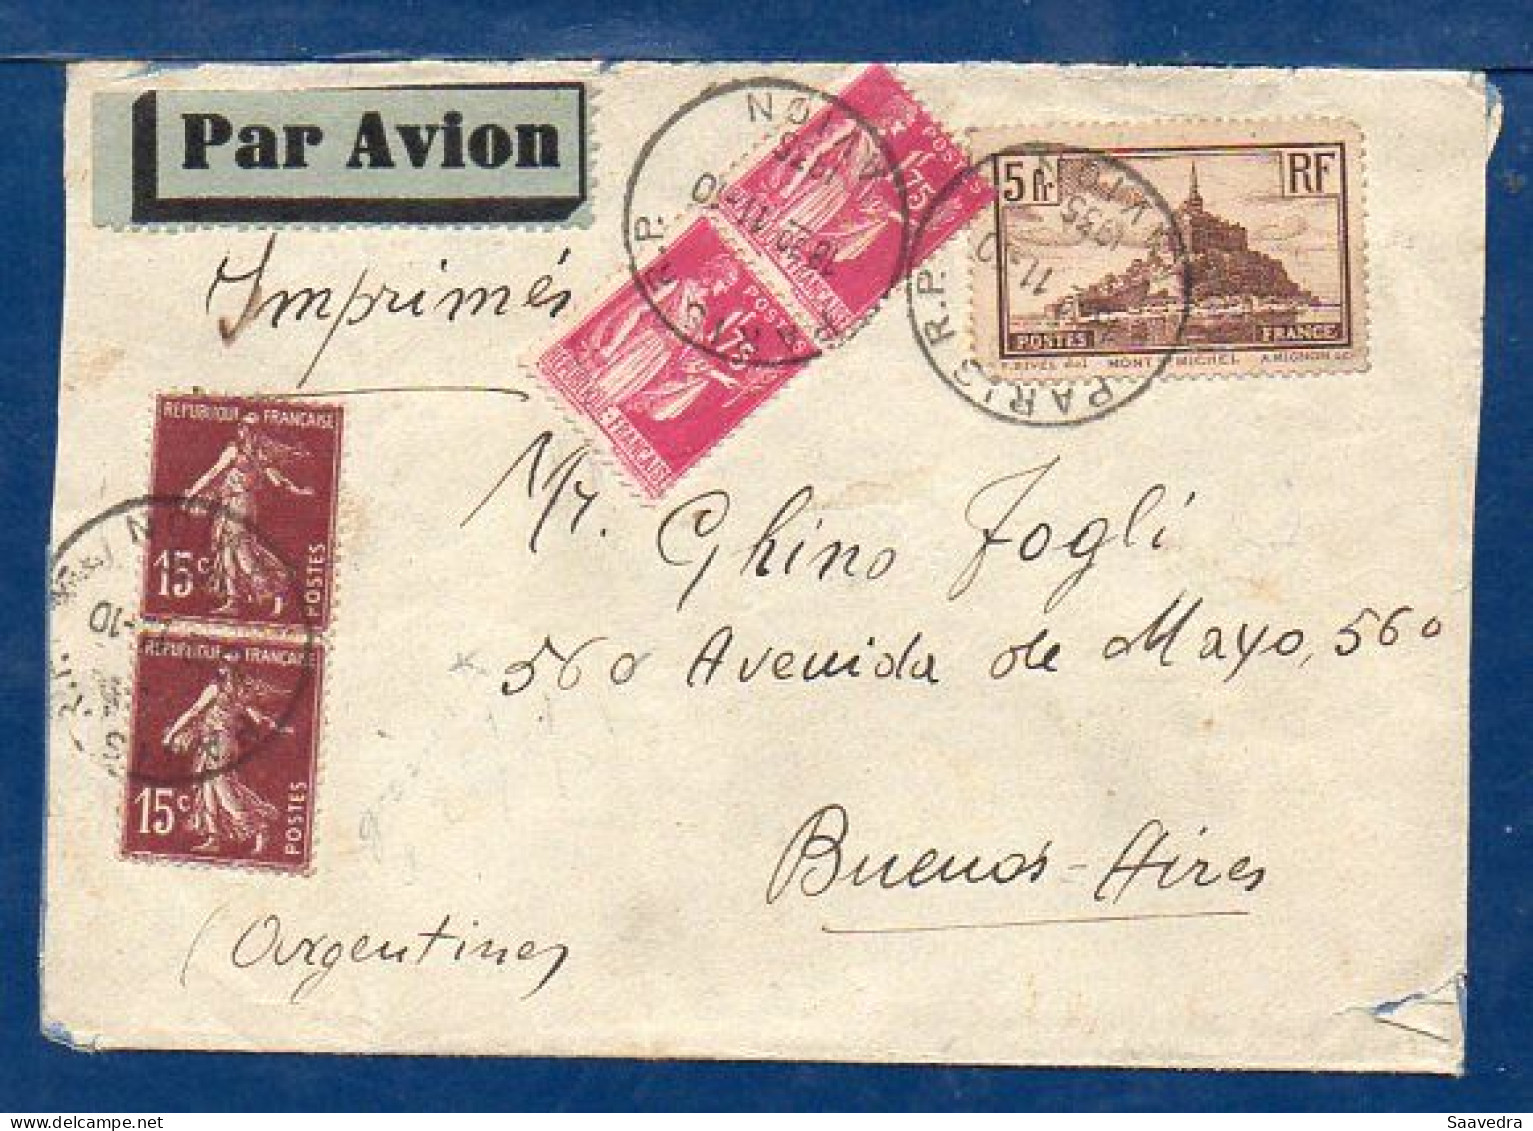 France To Argentina, 1935, Via Air France  (006) - Posta Aerea